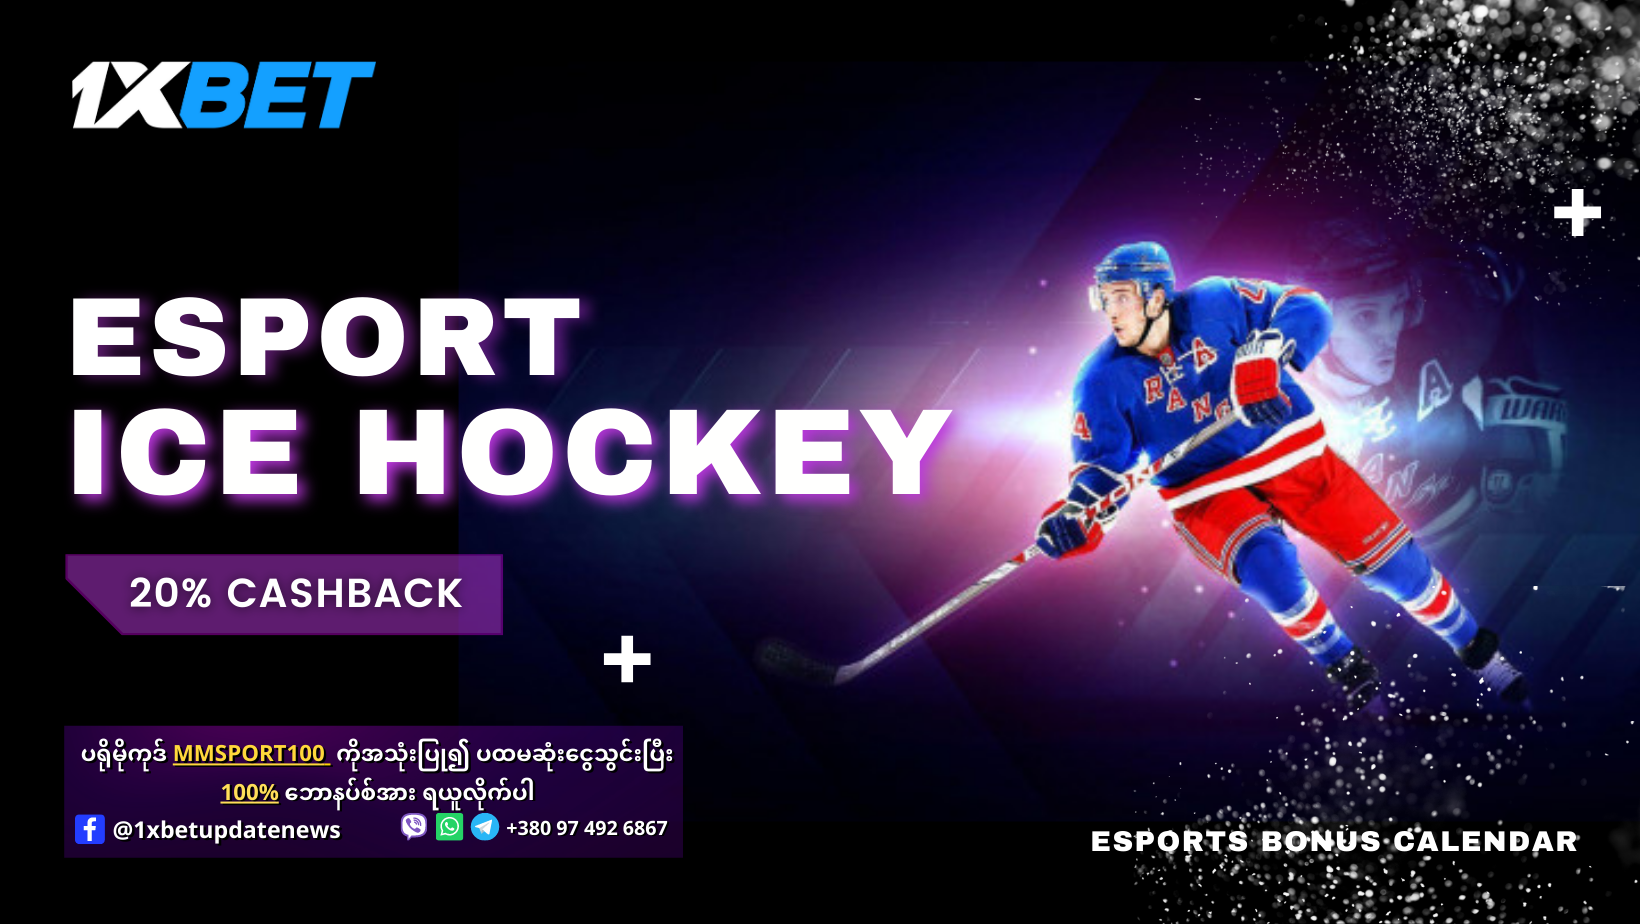 Esport Ice Hockey 1xBet Offer